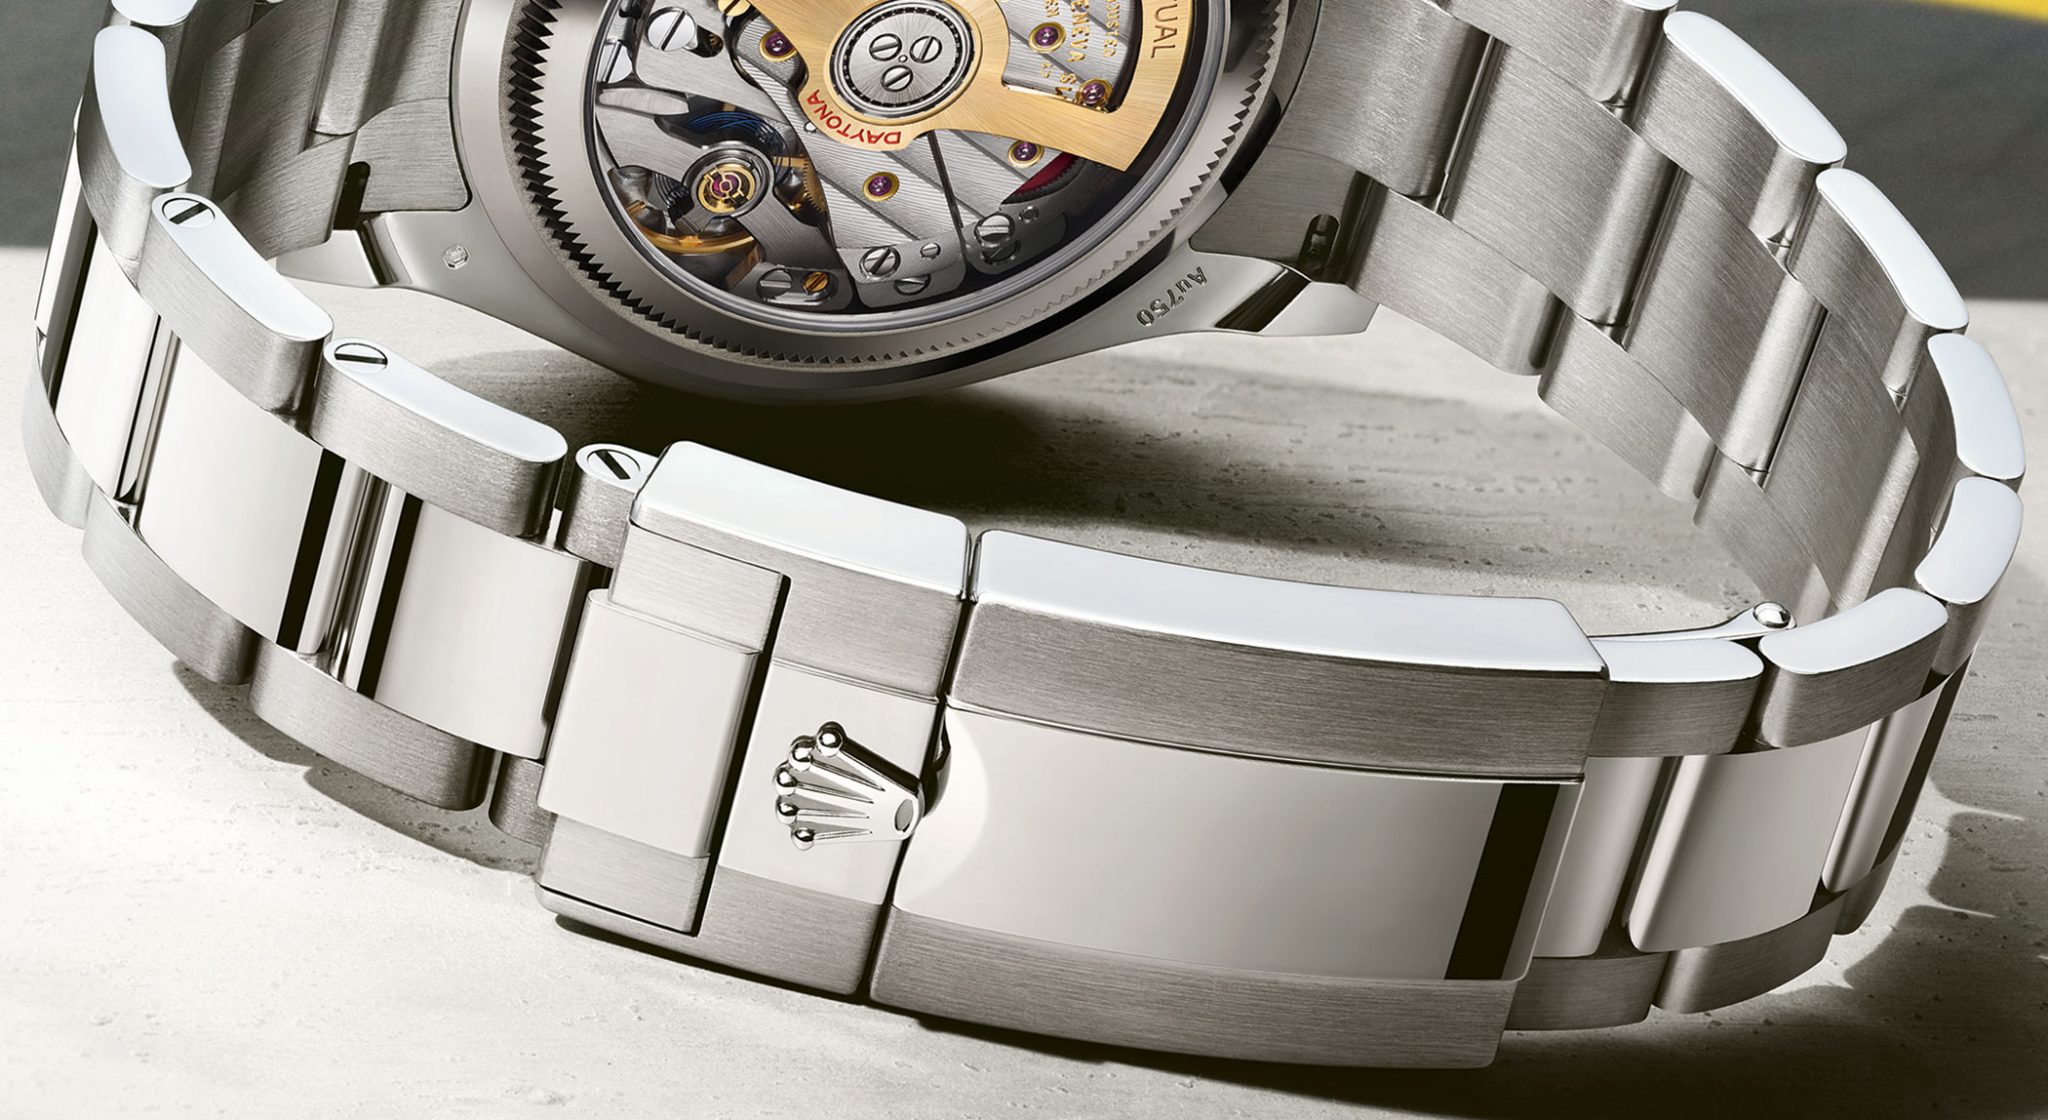 Armband-Rolex-Cosmograph-Daytona-24h-Lemans-Ref-M126529ln-0001-Fotocredit-JVA-fuer-Rolex-13